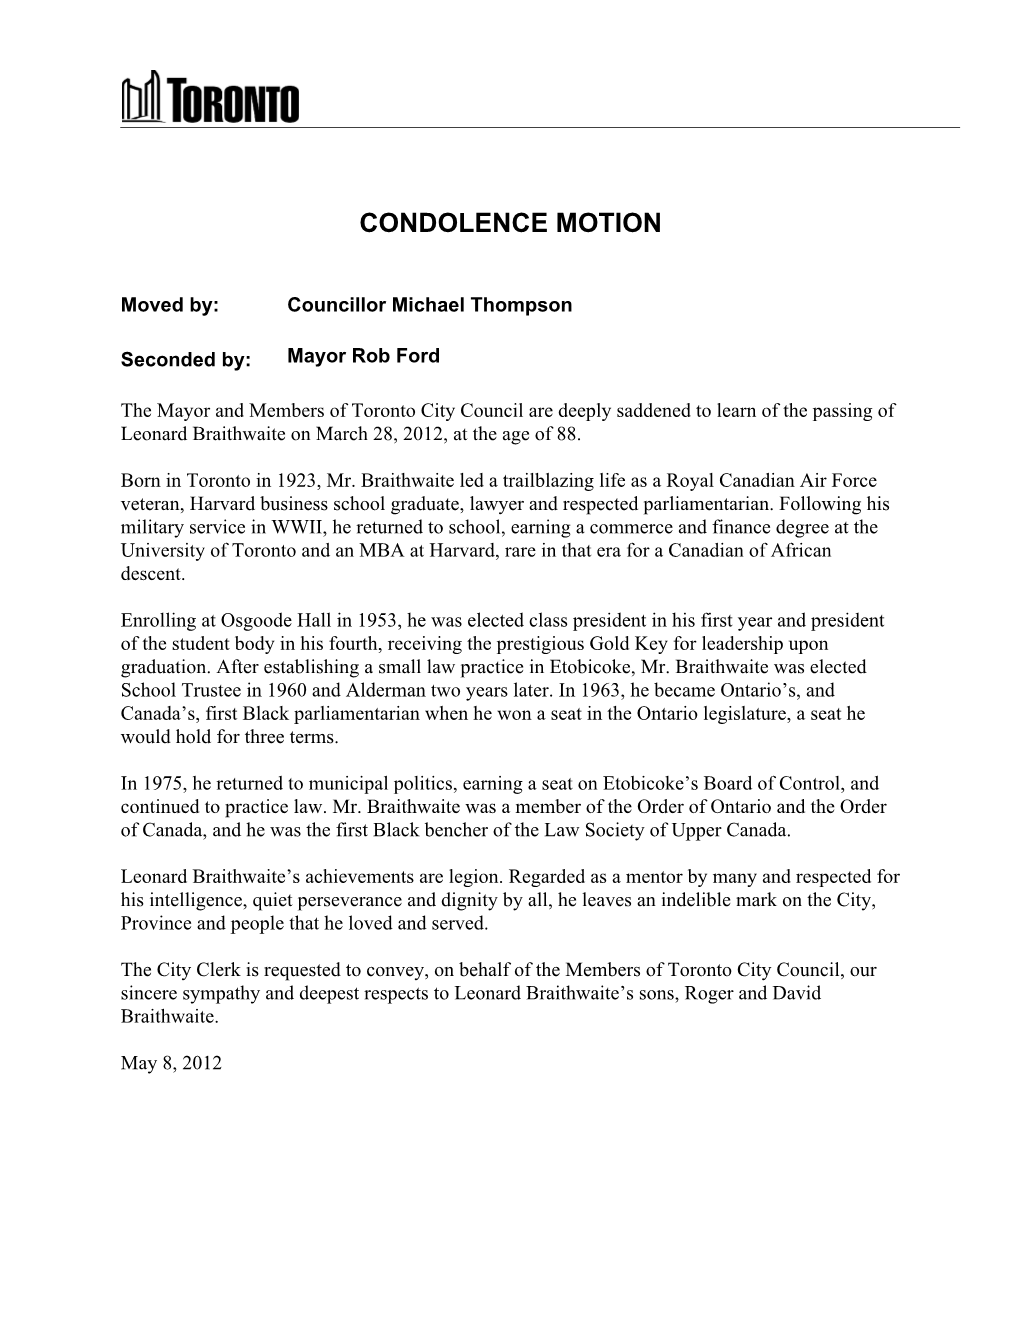 Revised Condolence Motion Final Leonard Braithwaite.Docx